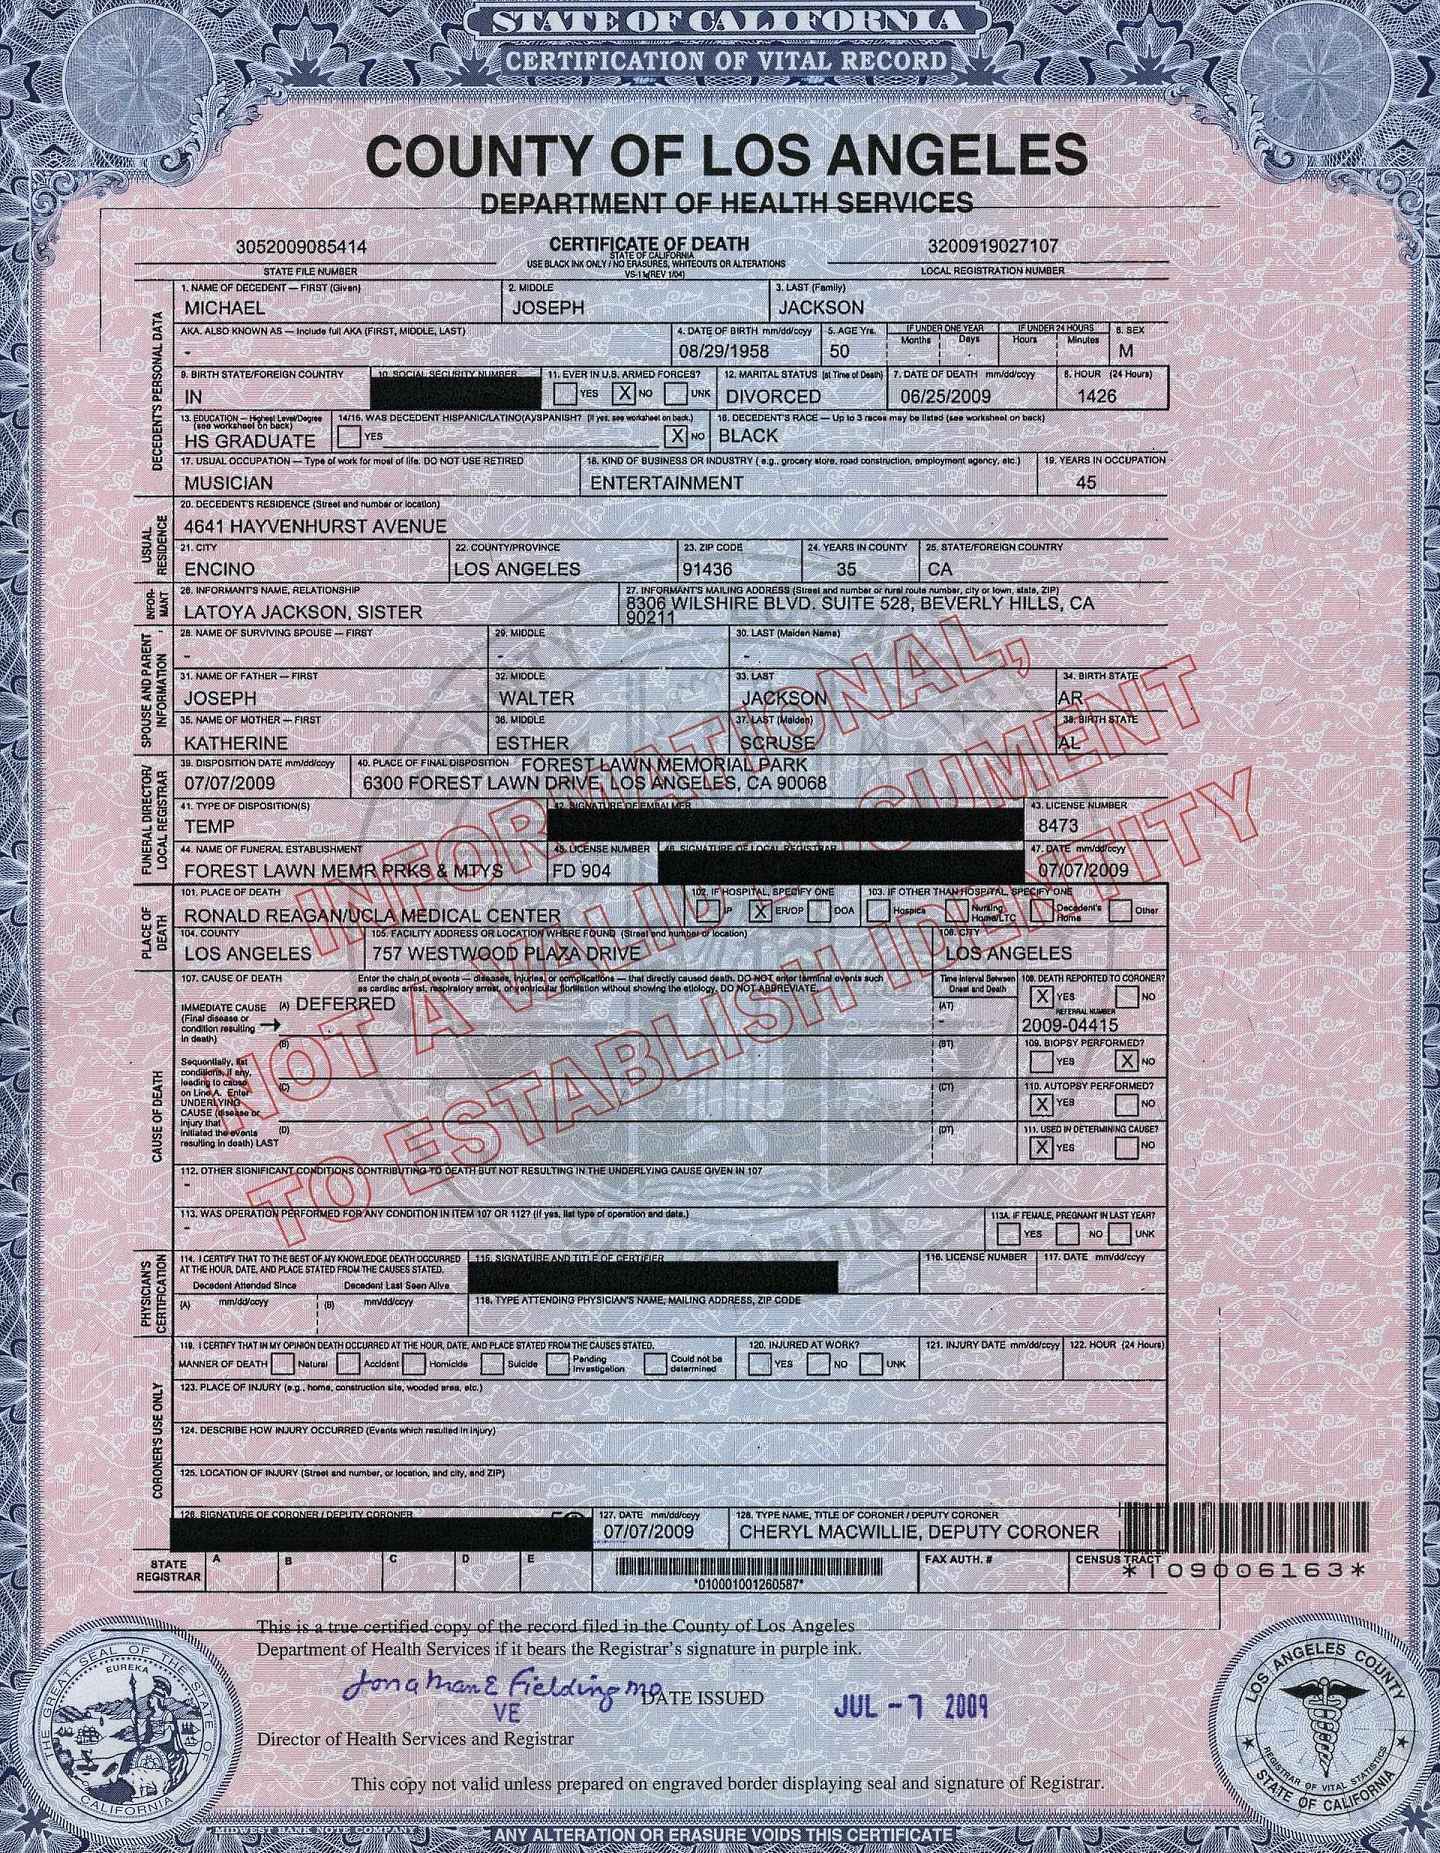 Michael Jackson's death certificate 